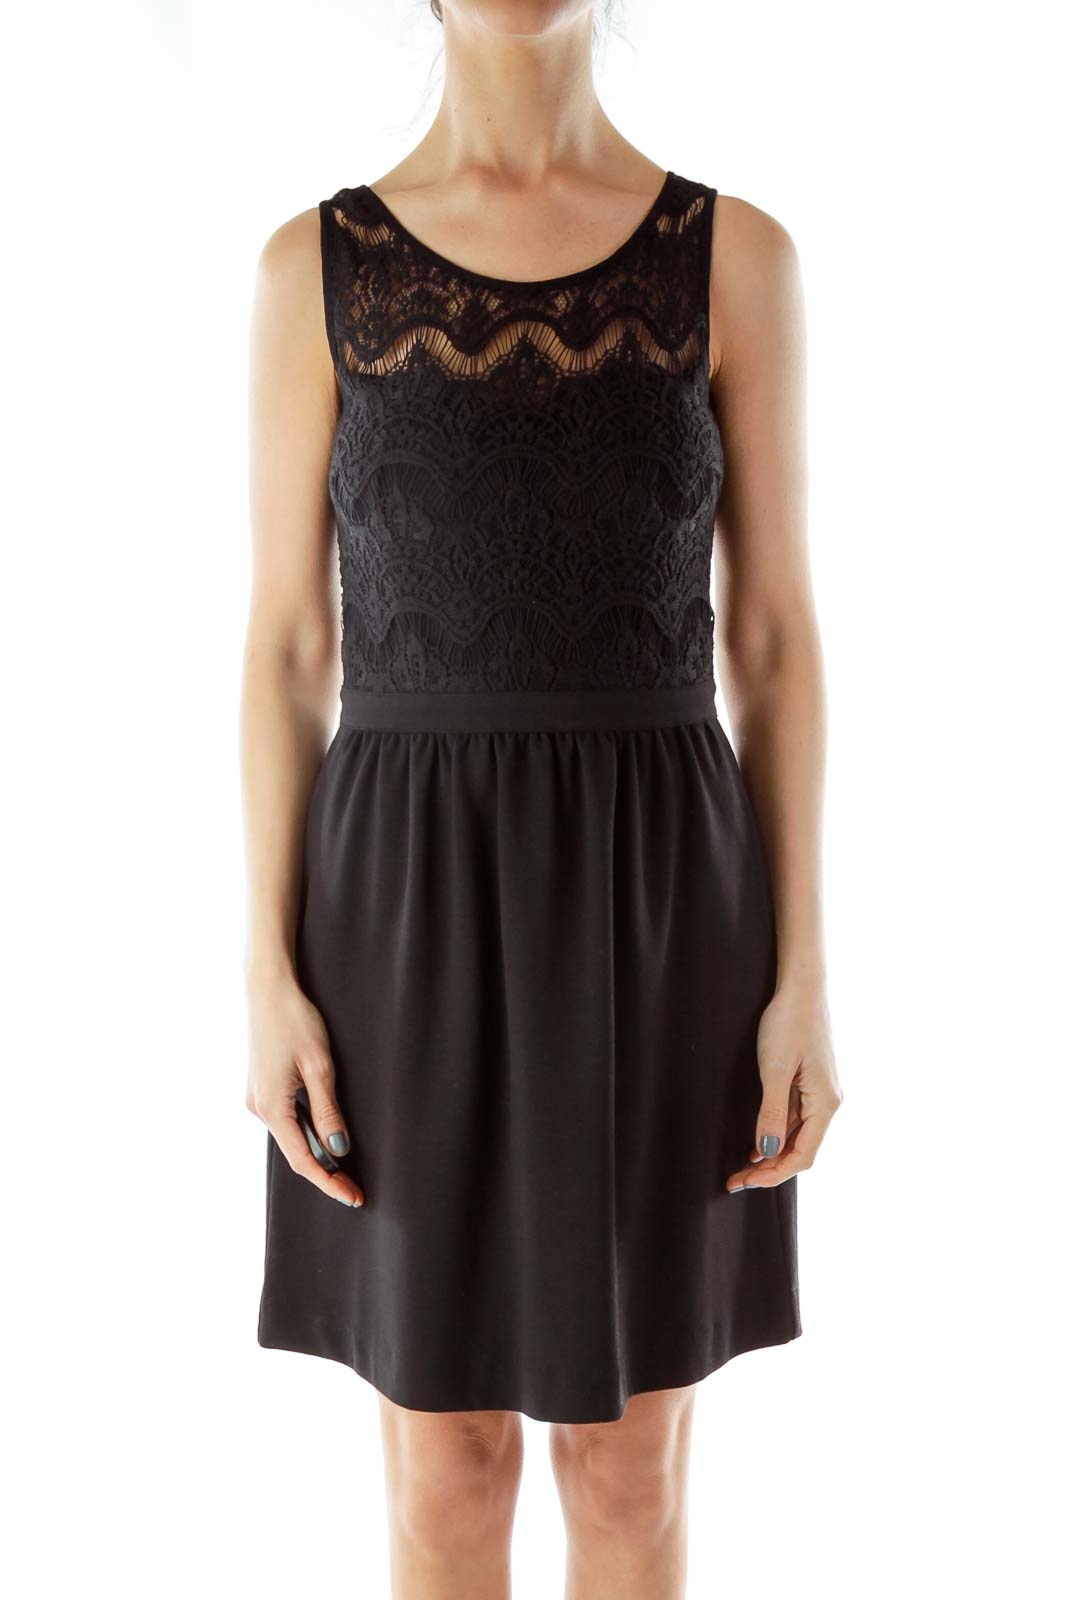 Black Lace-Bodice Cocktail Dress Front